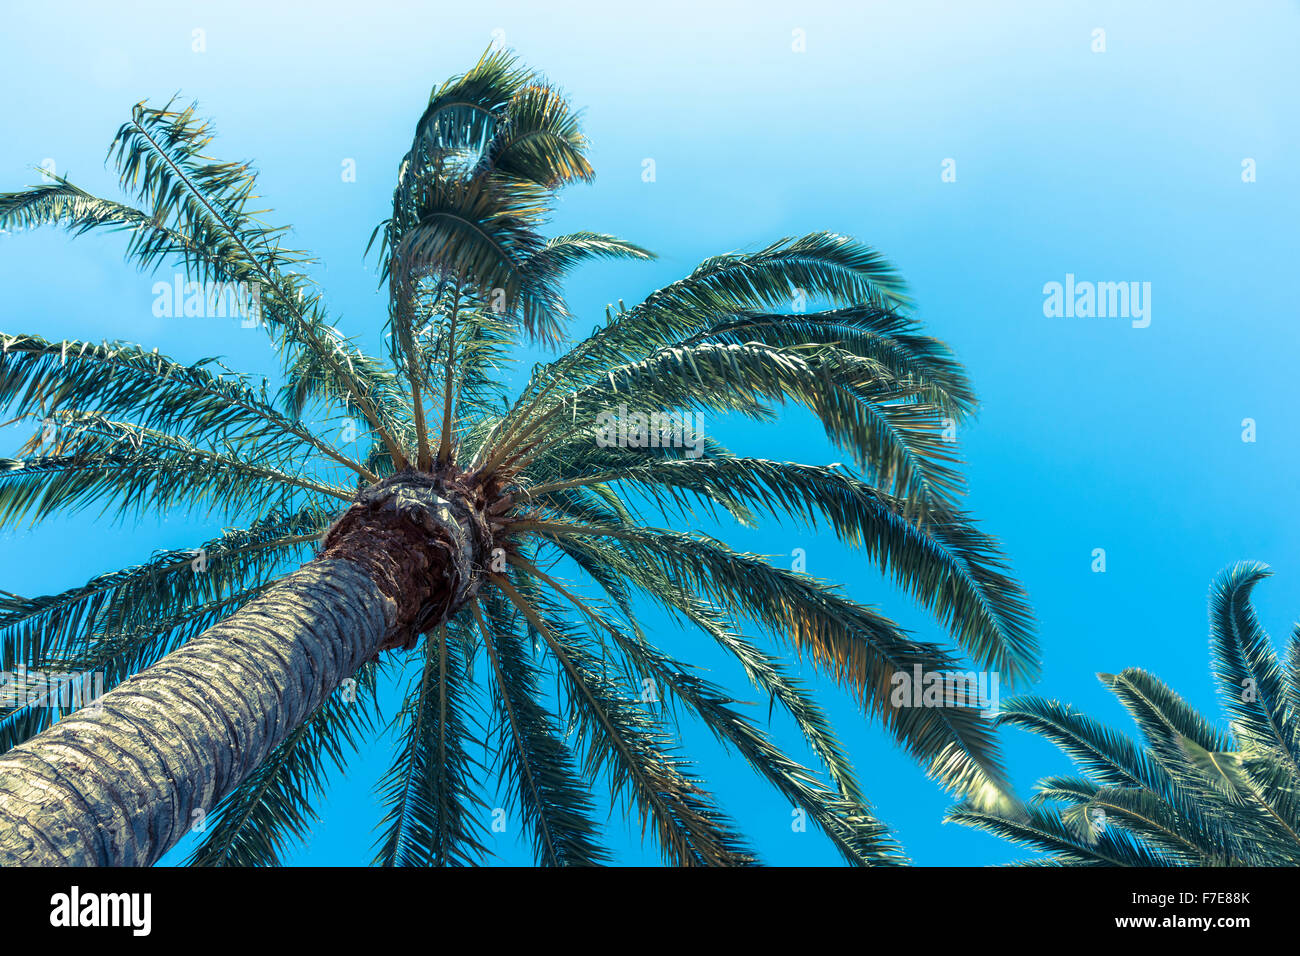 california fronds nature palm tree scenery scenic stock image stock photo trees tropical  retro effect Stock Photo